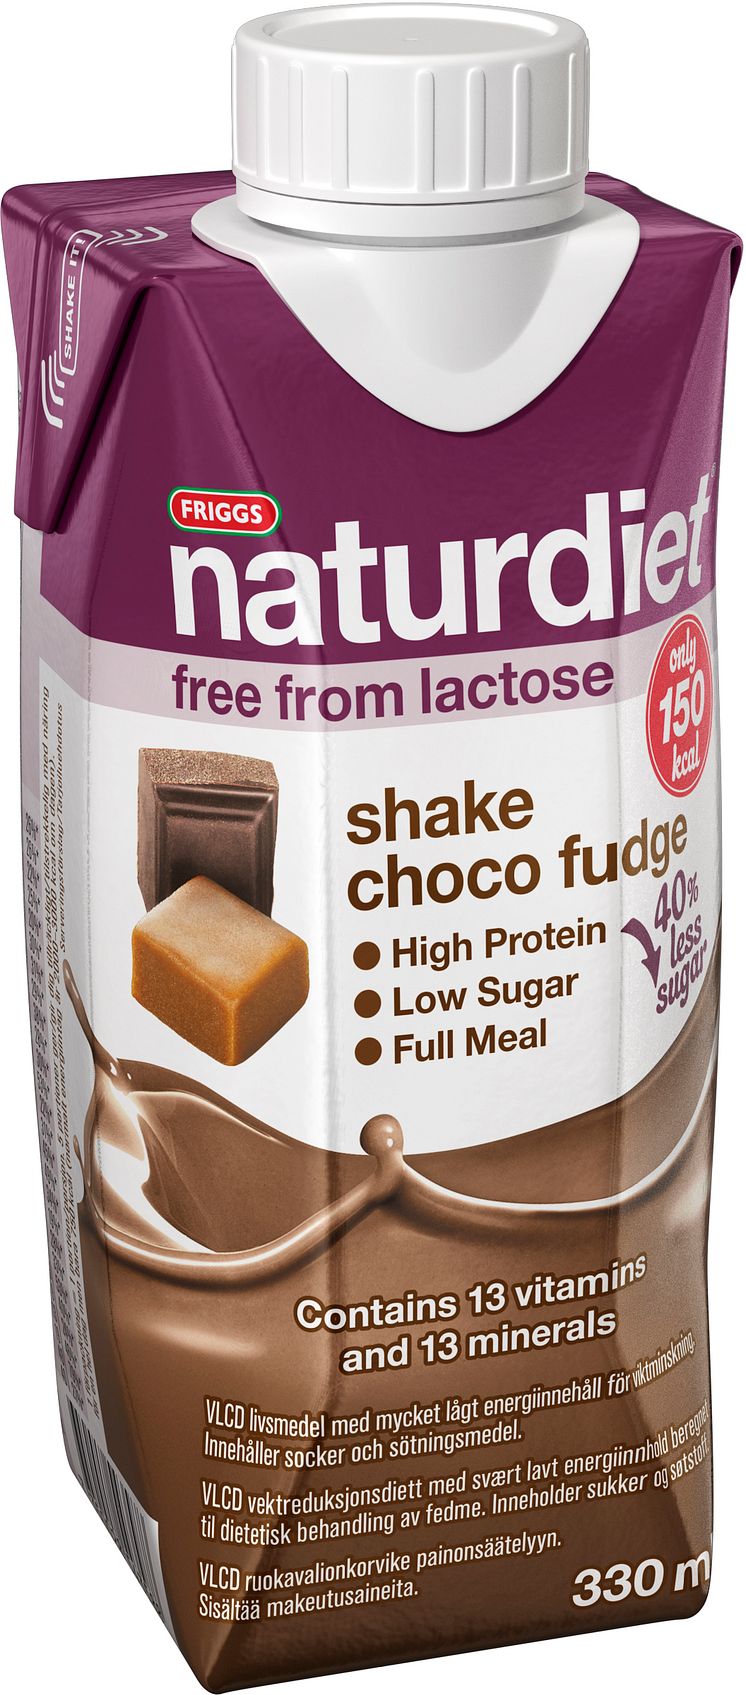 Naturdiet Choco Fudge shake - laktosfri - nu med mindre socker